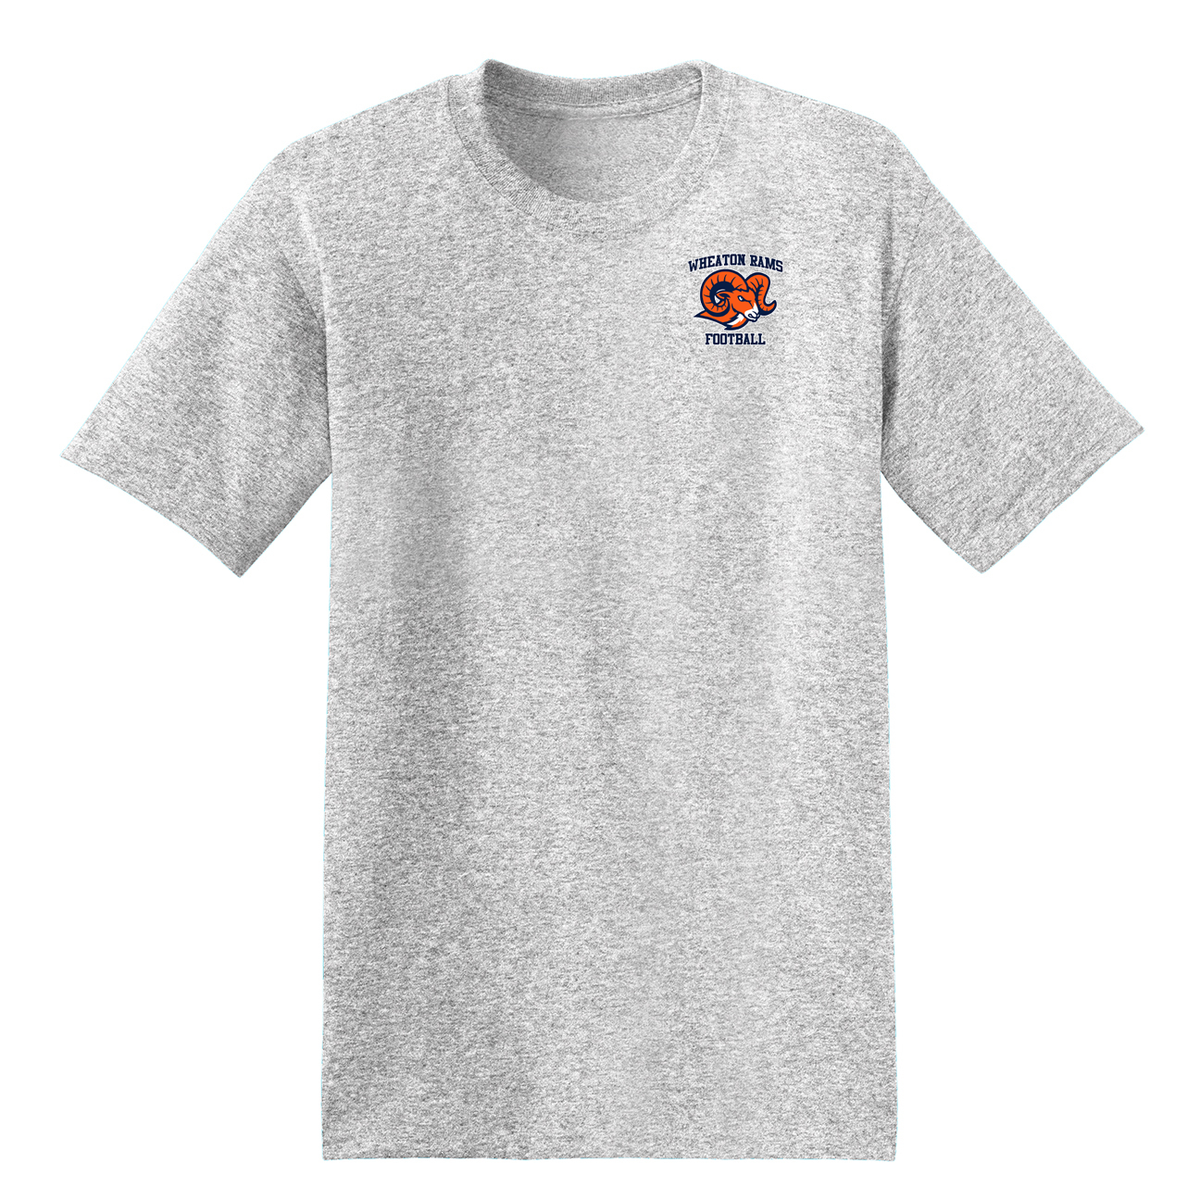 Wheaton Rams Football T-Shirt